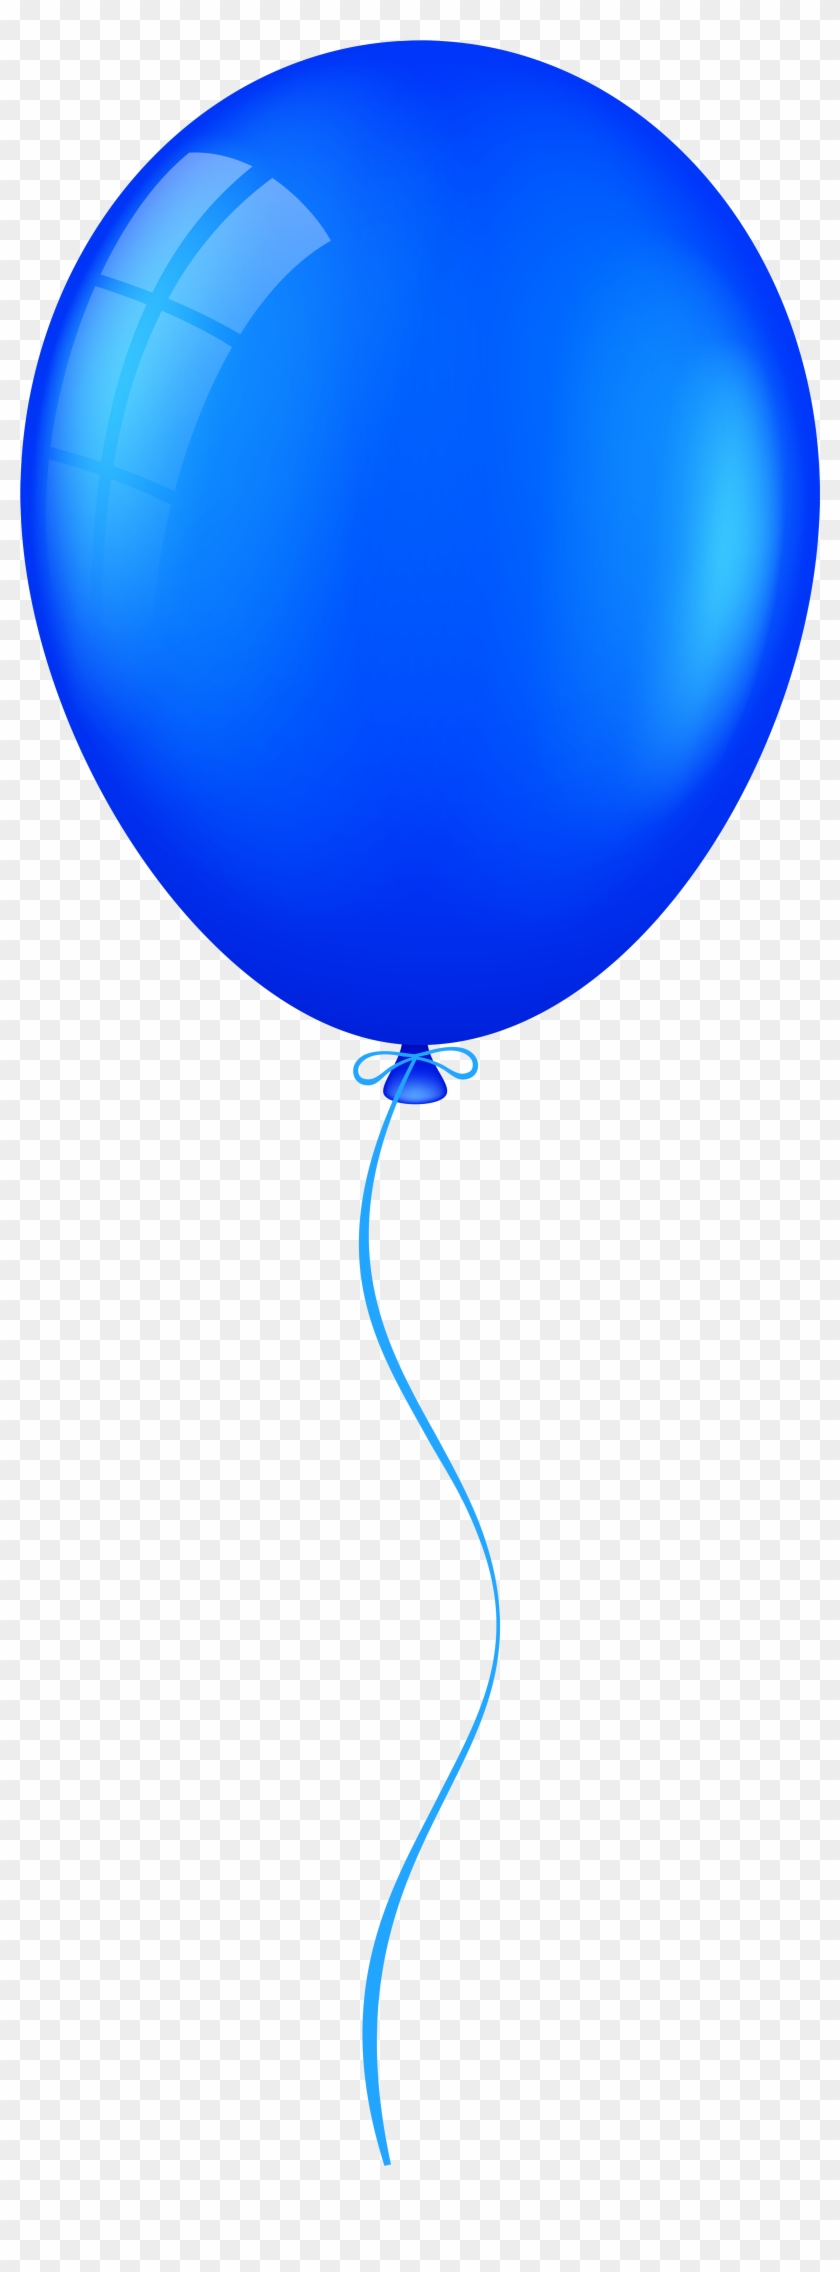 Blue Balloons Clipart Balloon Navy Pencil And In Color - Blue Balloon Clipart #160081